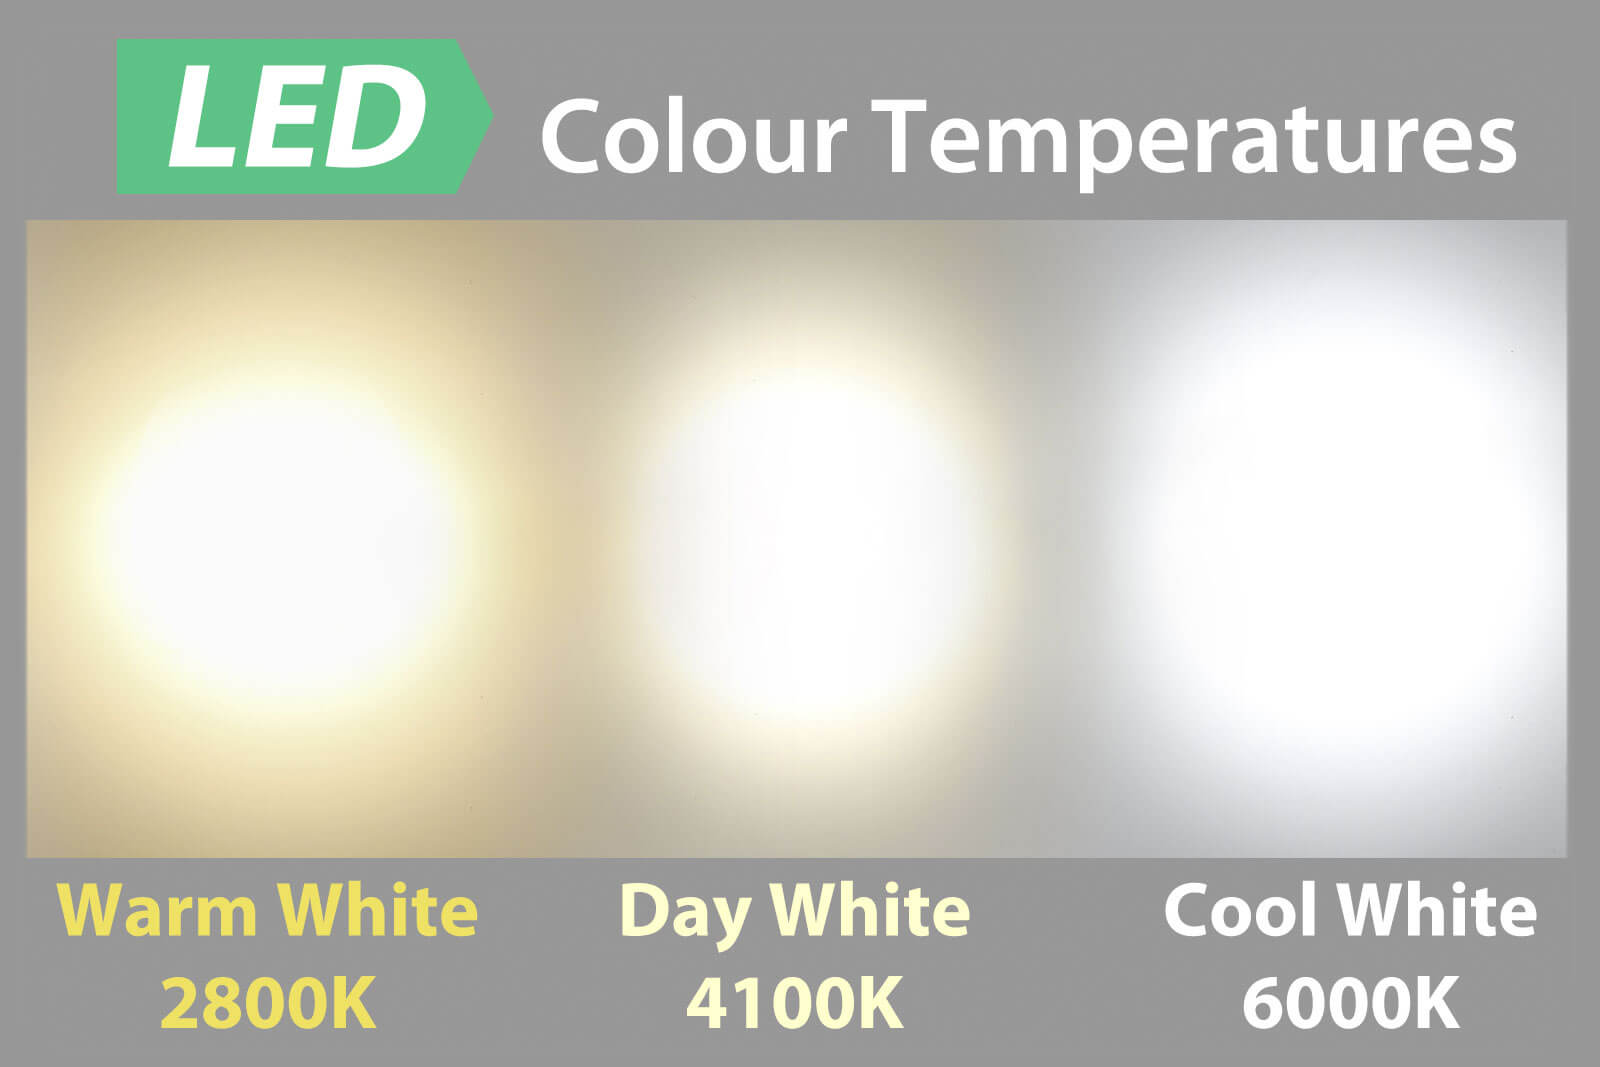 Ledlam led colour temperatures 2018 07